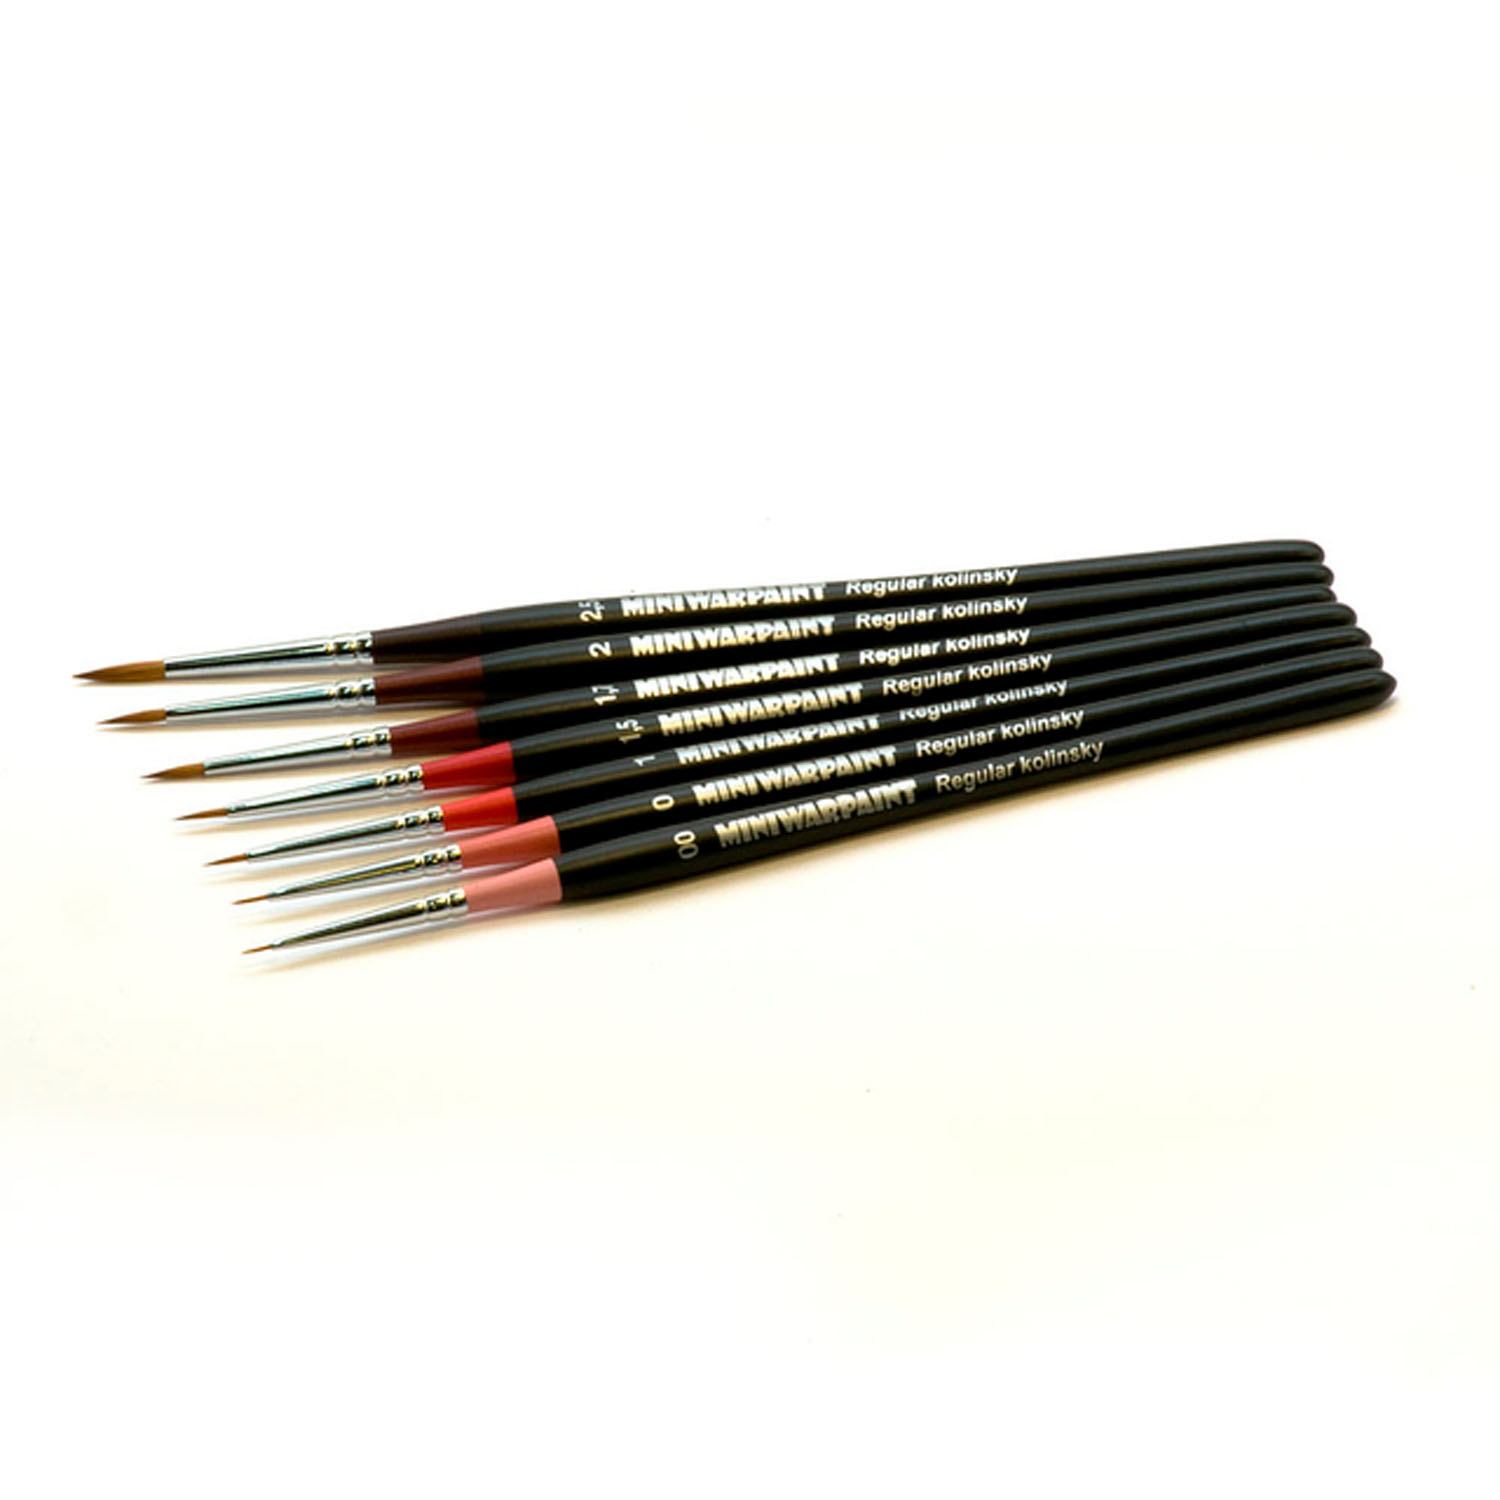 MiniWarPaint high quality kolinsky brushes 